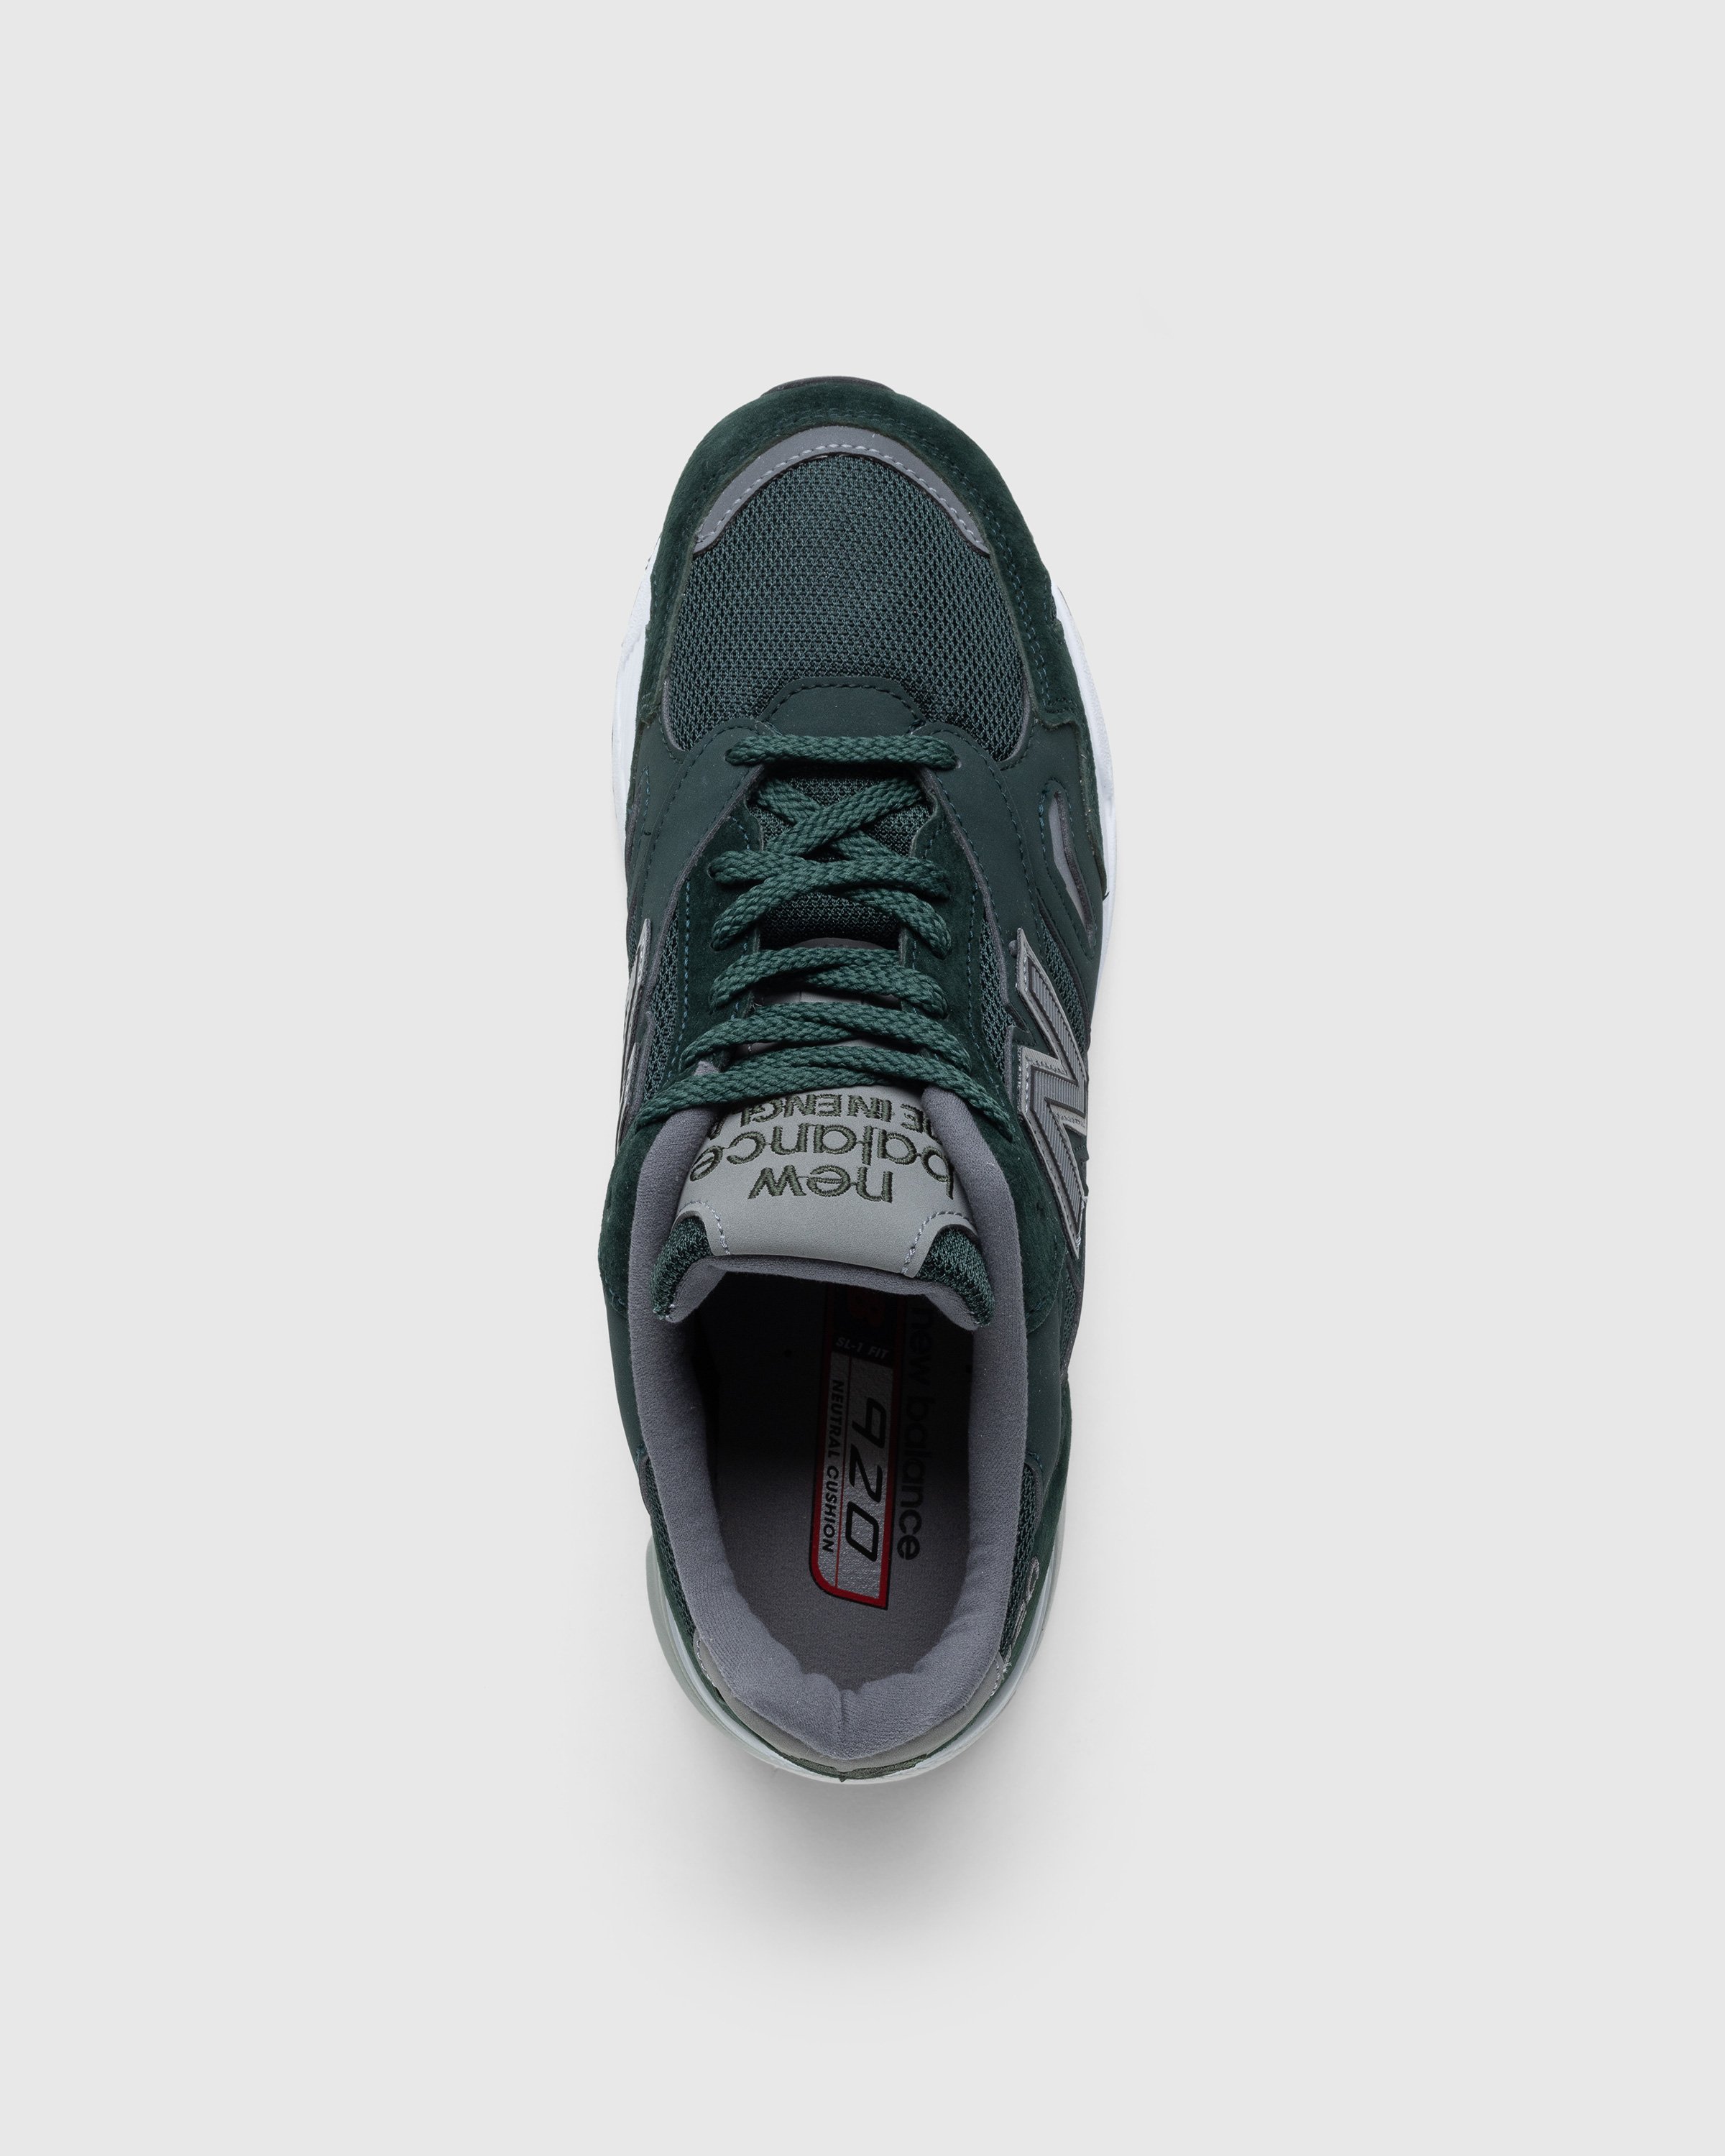 New Balance - M920GRN Green/Grey - Footwear - Green - Image 5